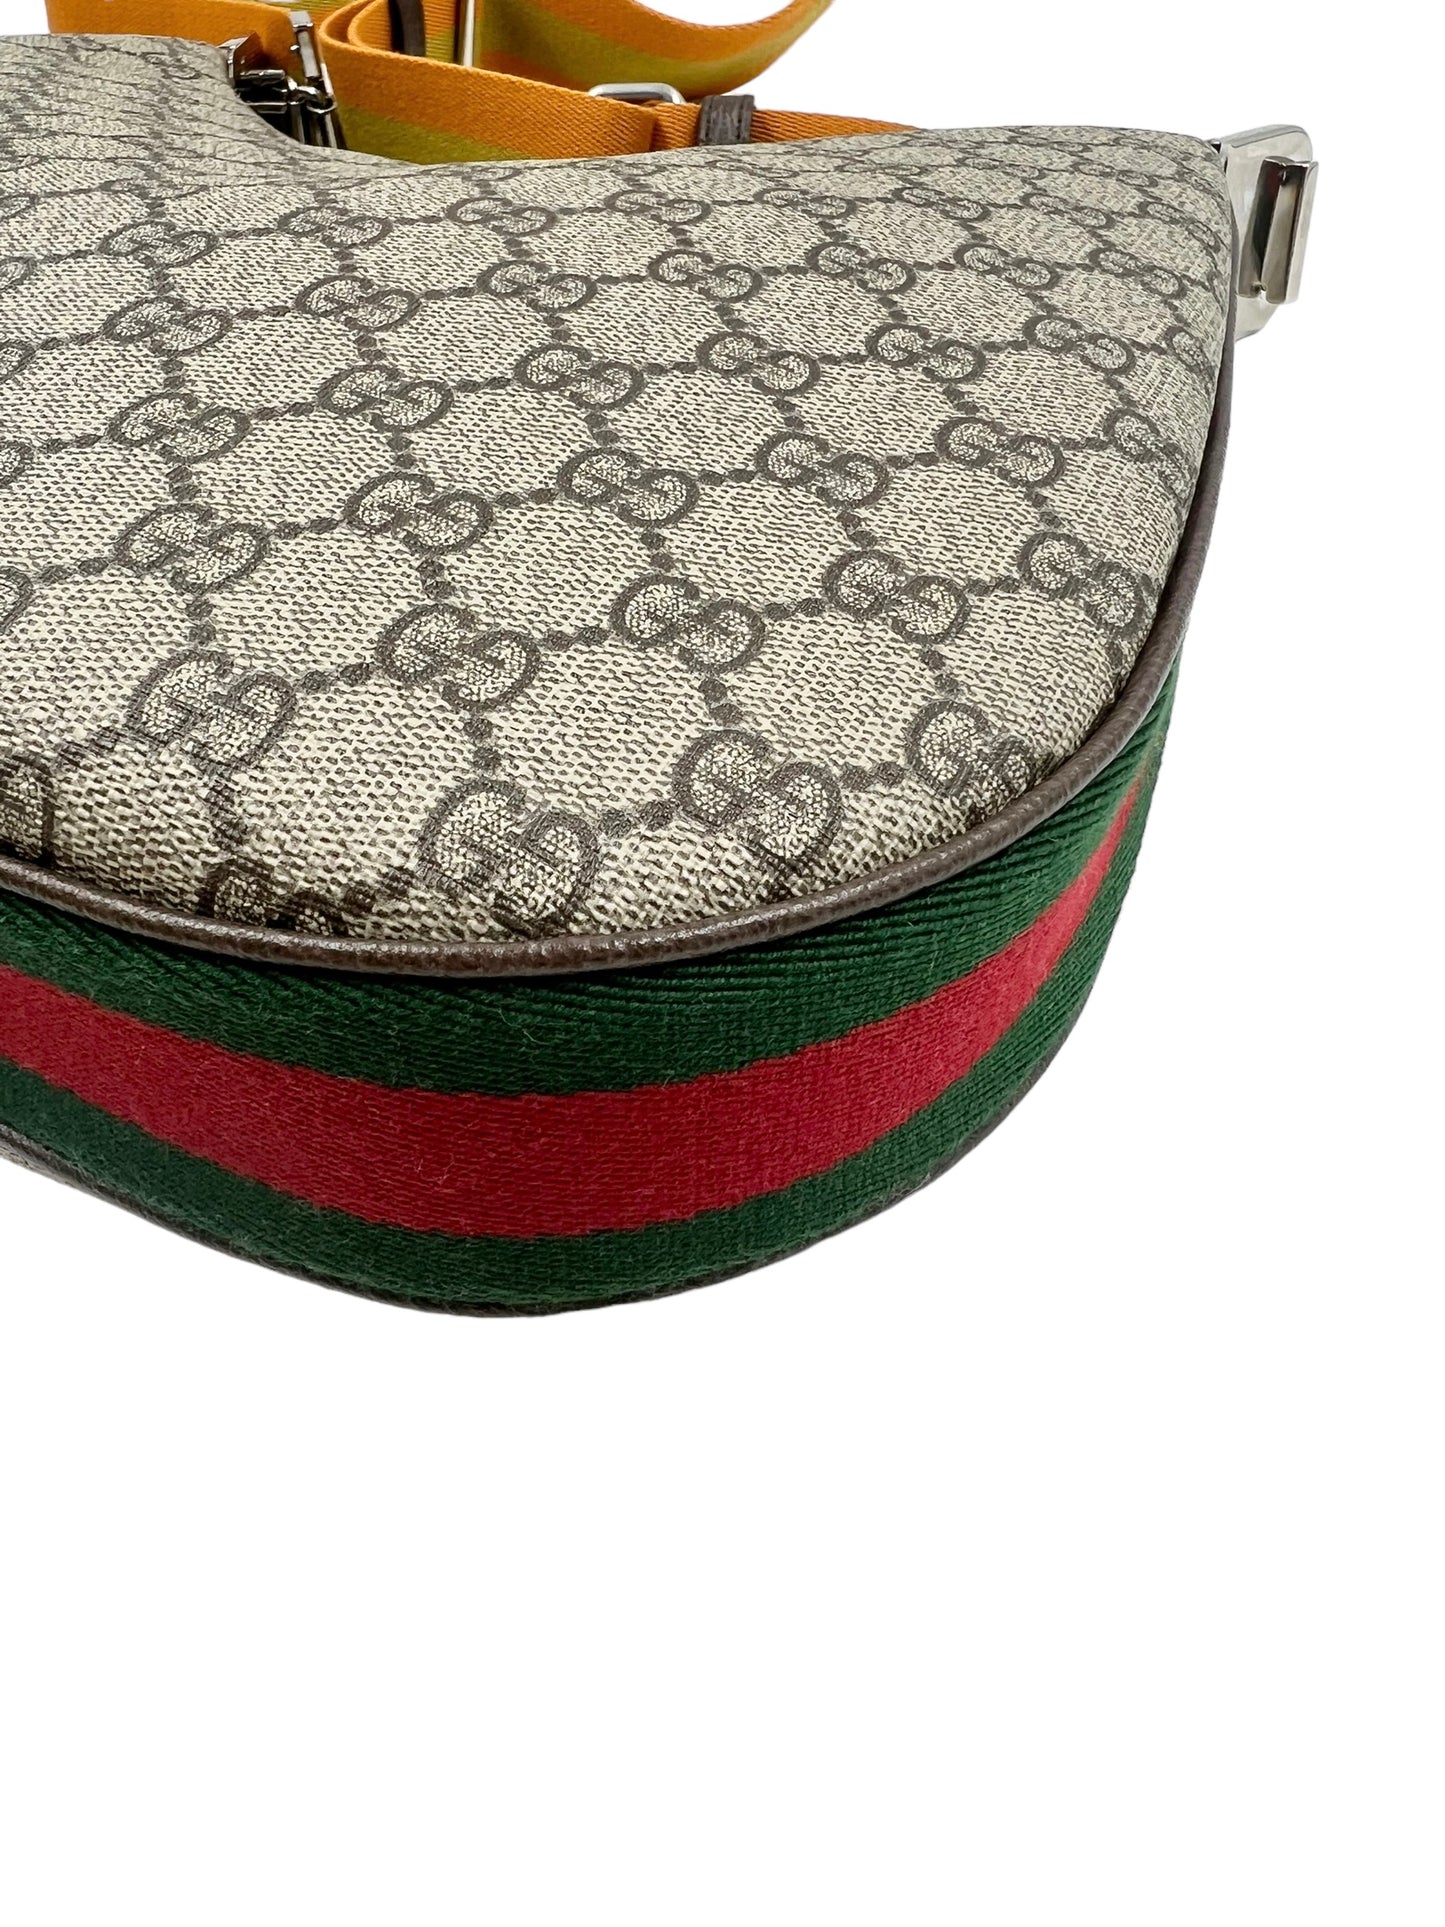 Gucci Large GG Attache Shoulder Bag